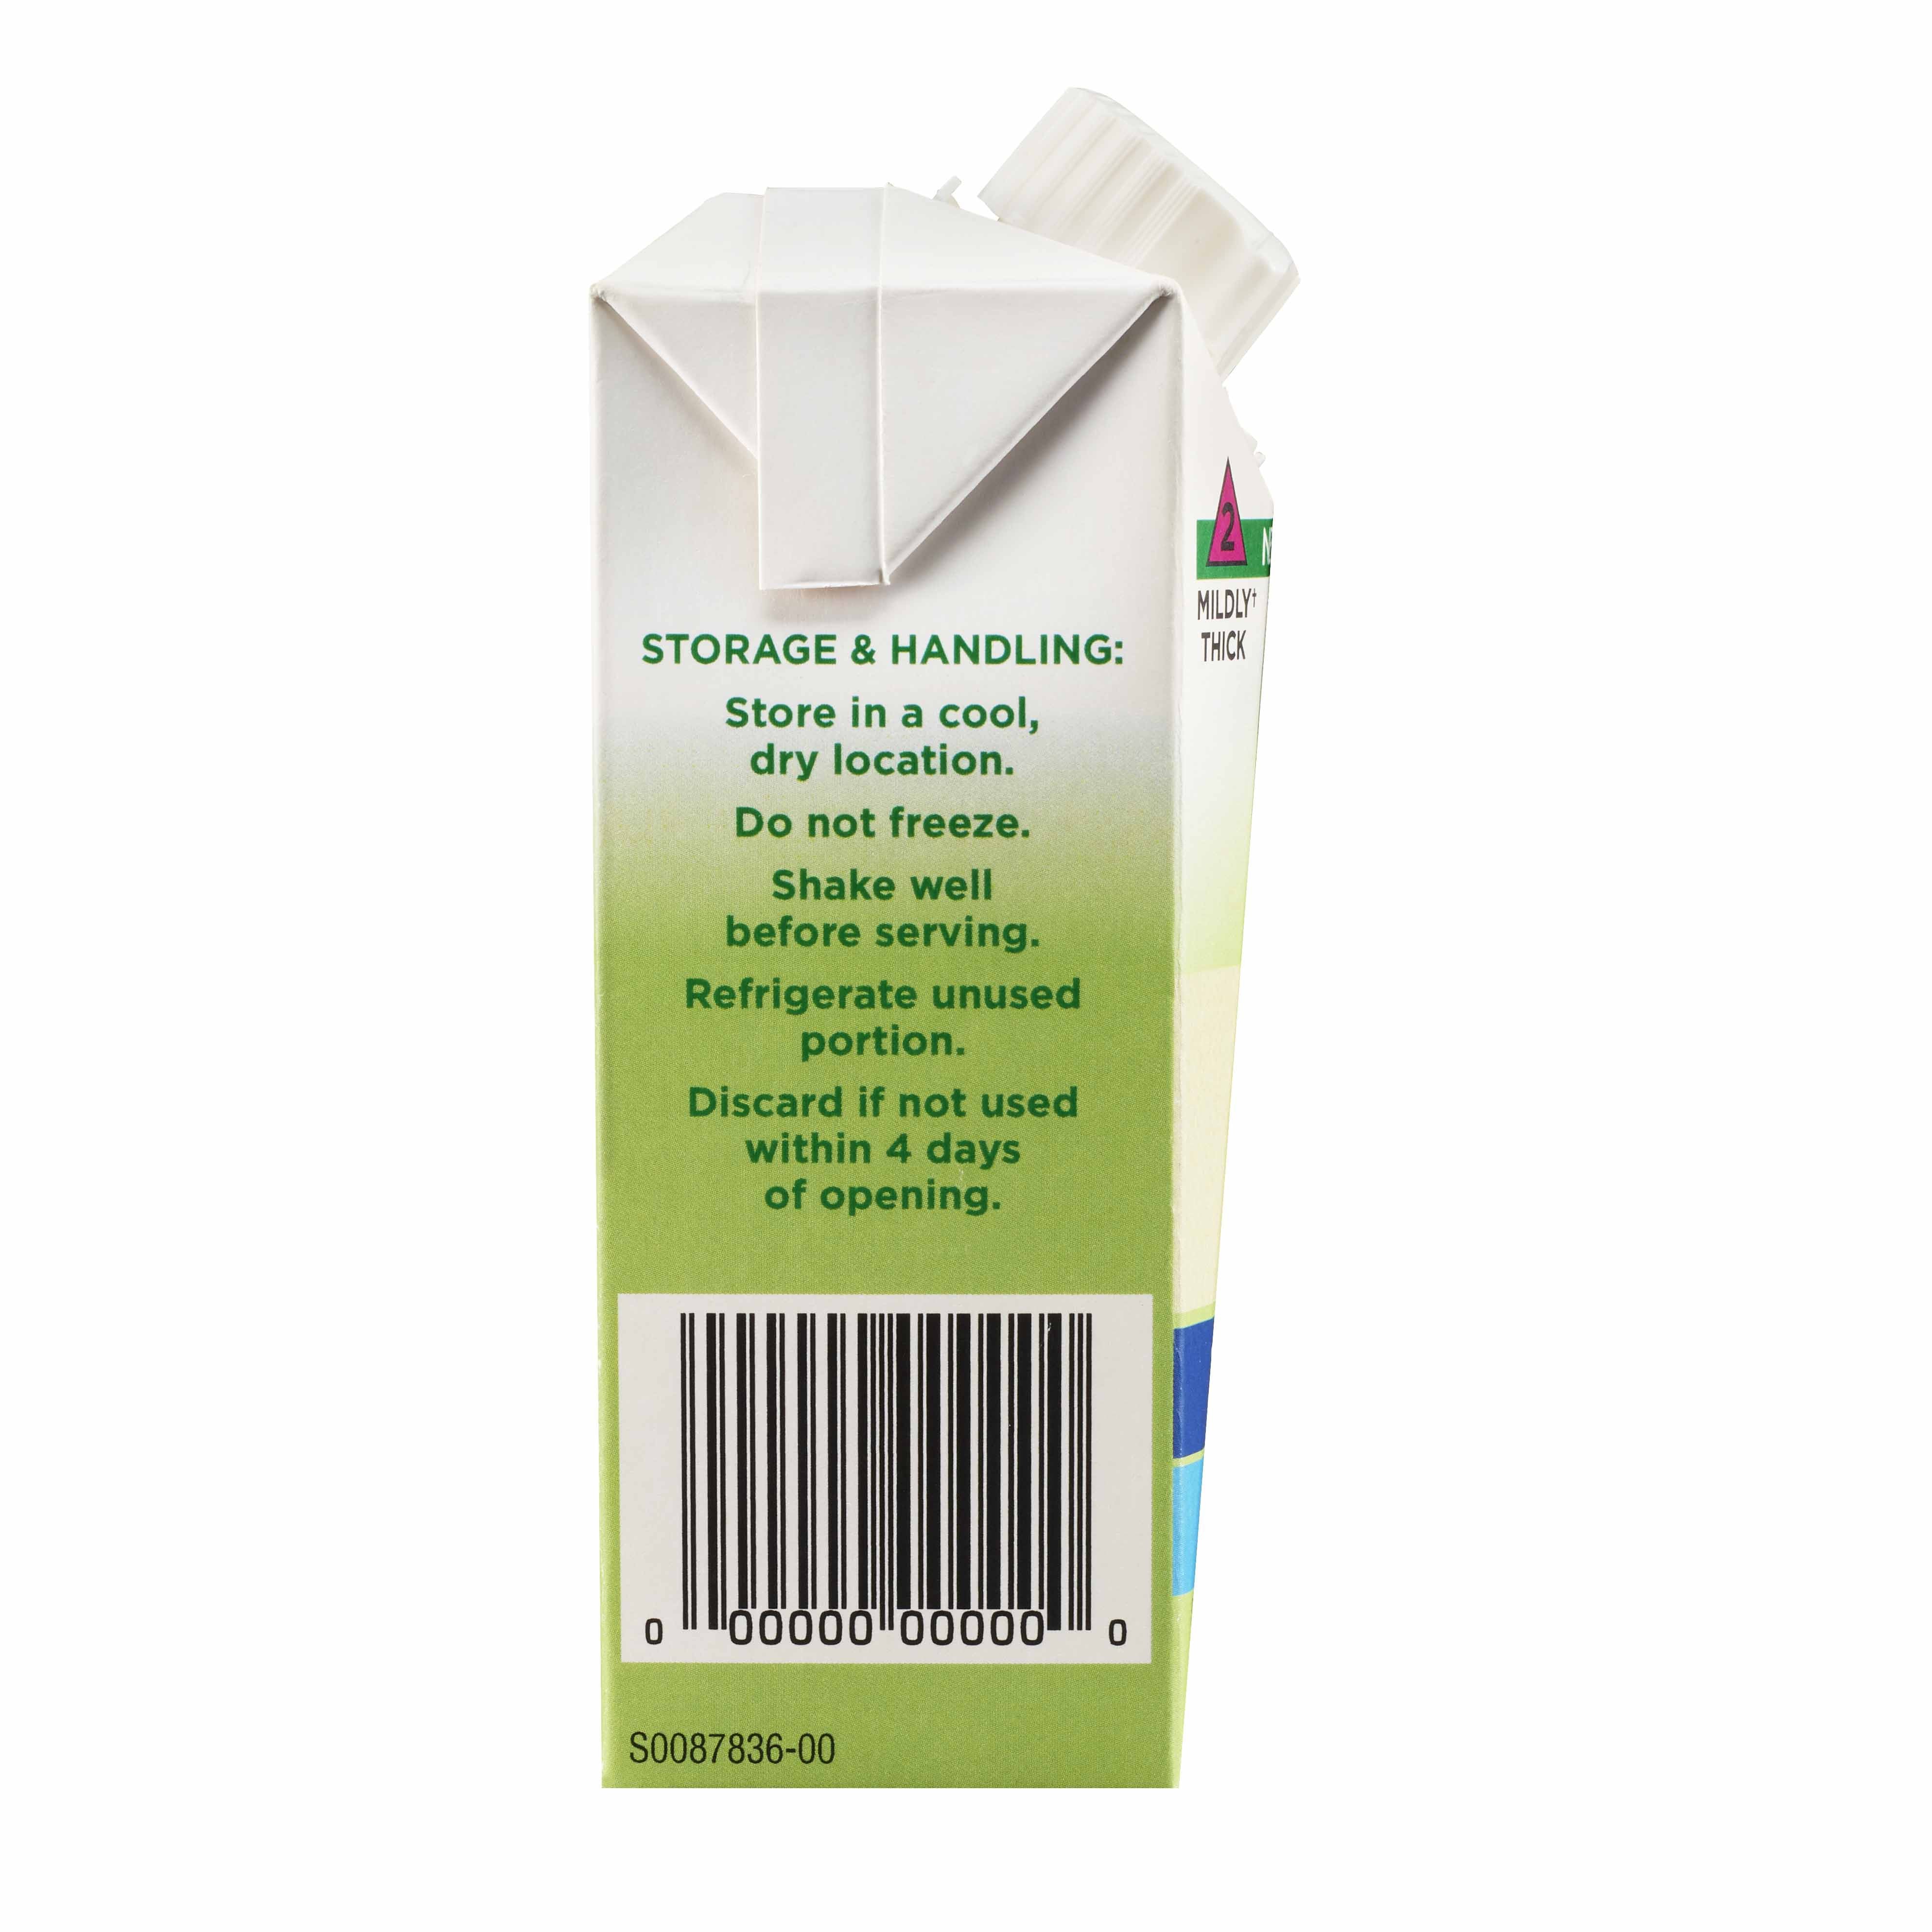 Oral Supplement Hormel Vital Cuisine 500 Shakes Vanilla Flavor Liquid 8.45 oz. Carton